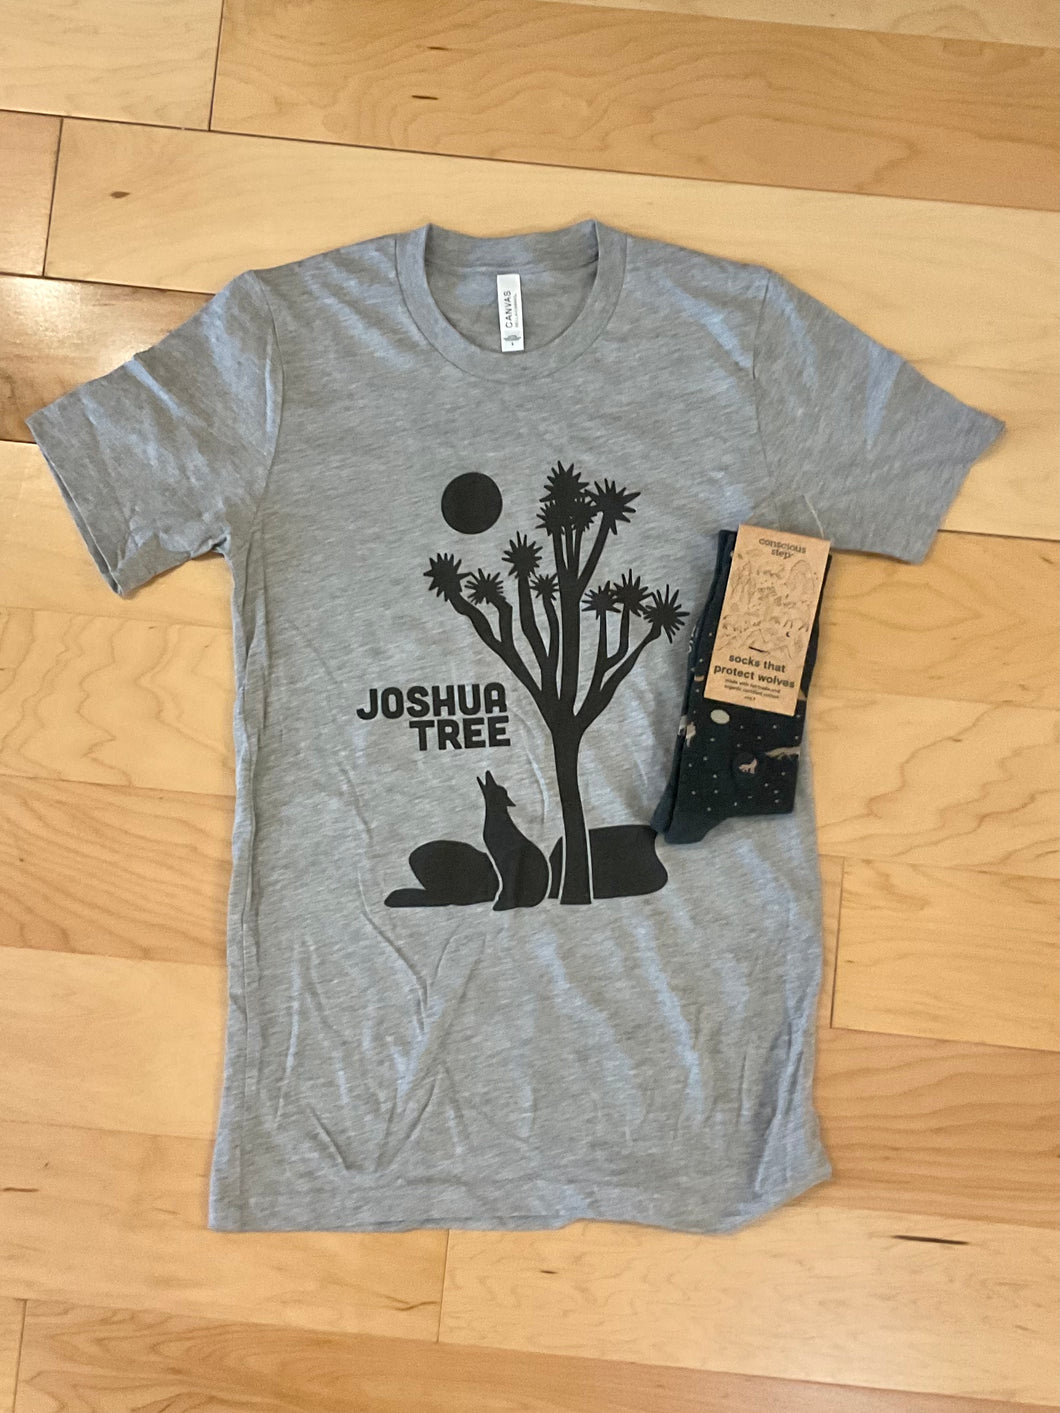 Joshua Tree national park tee shirt